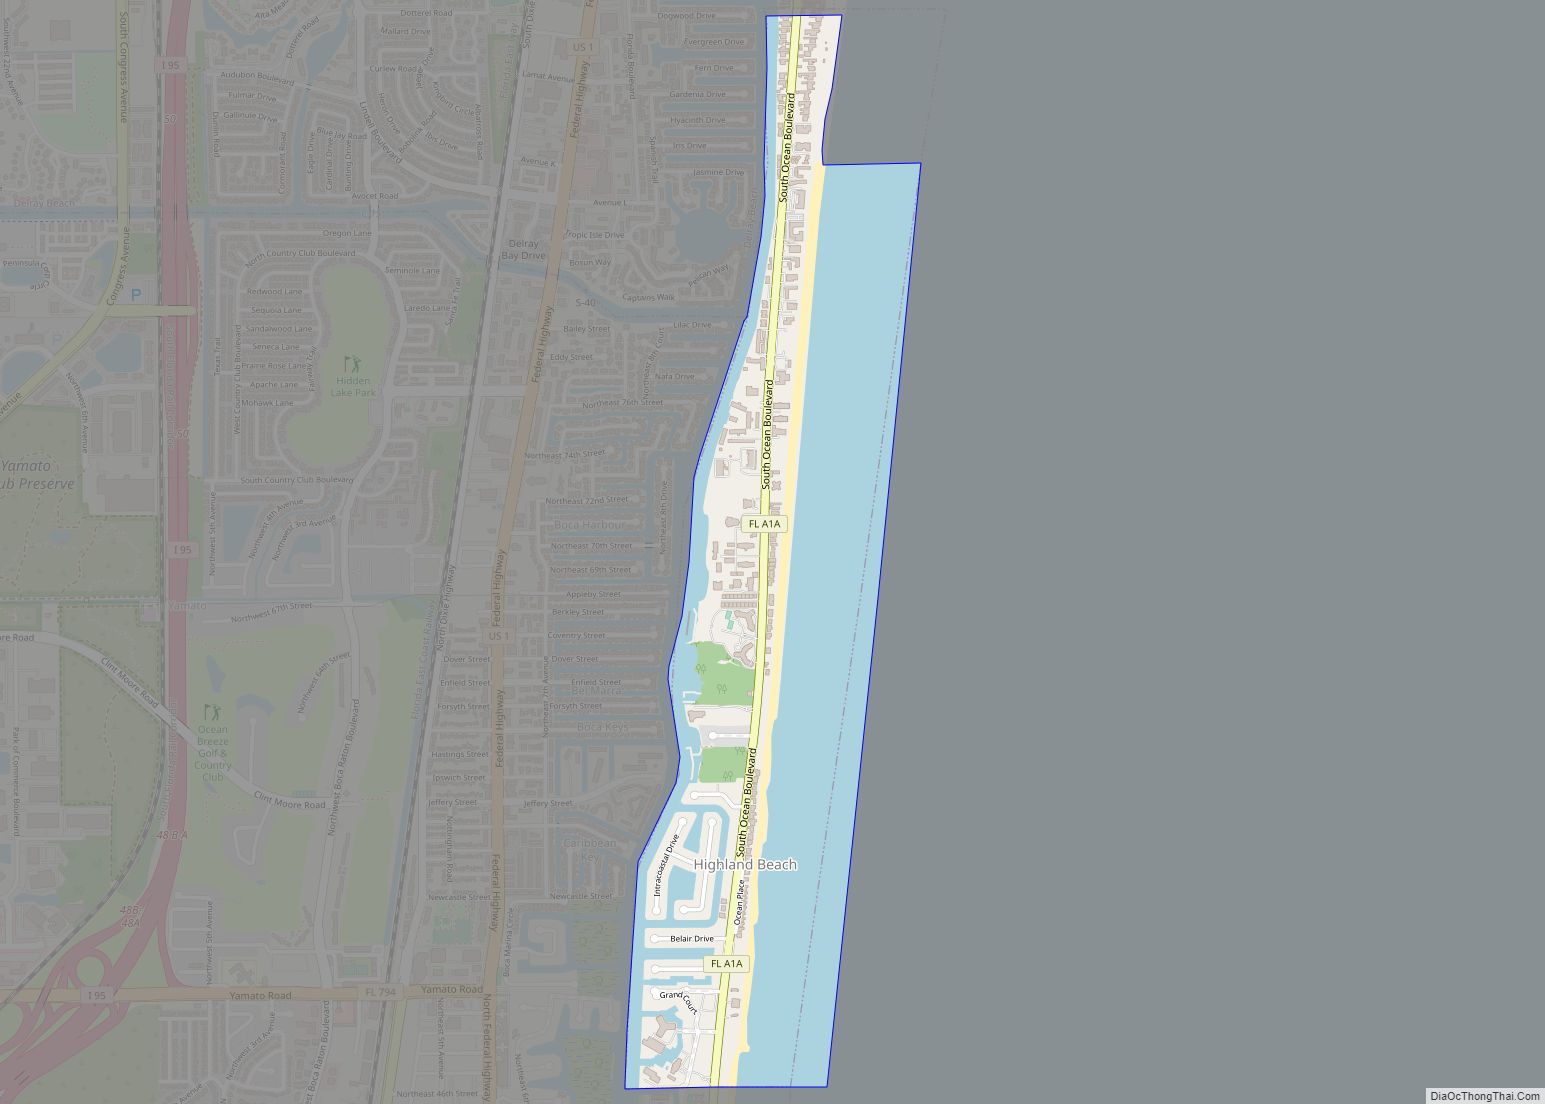 Map of Highland Beach town